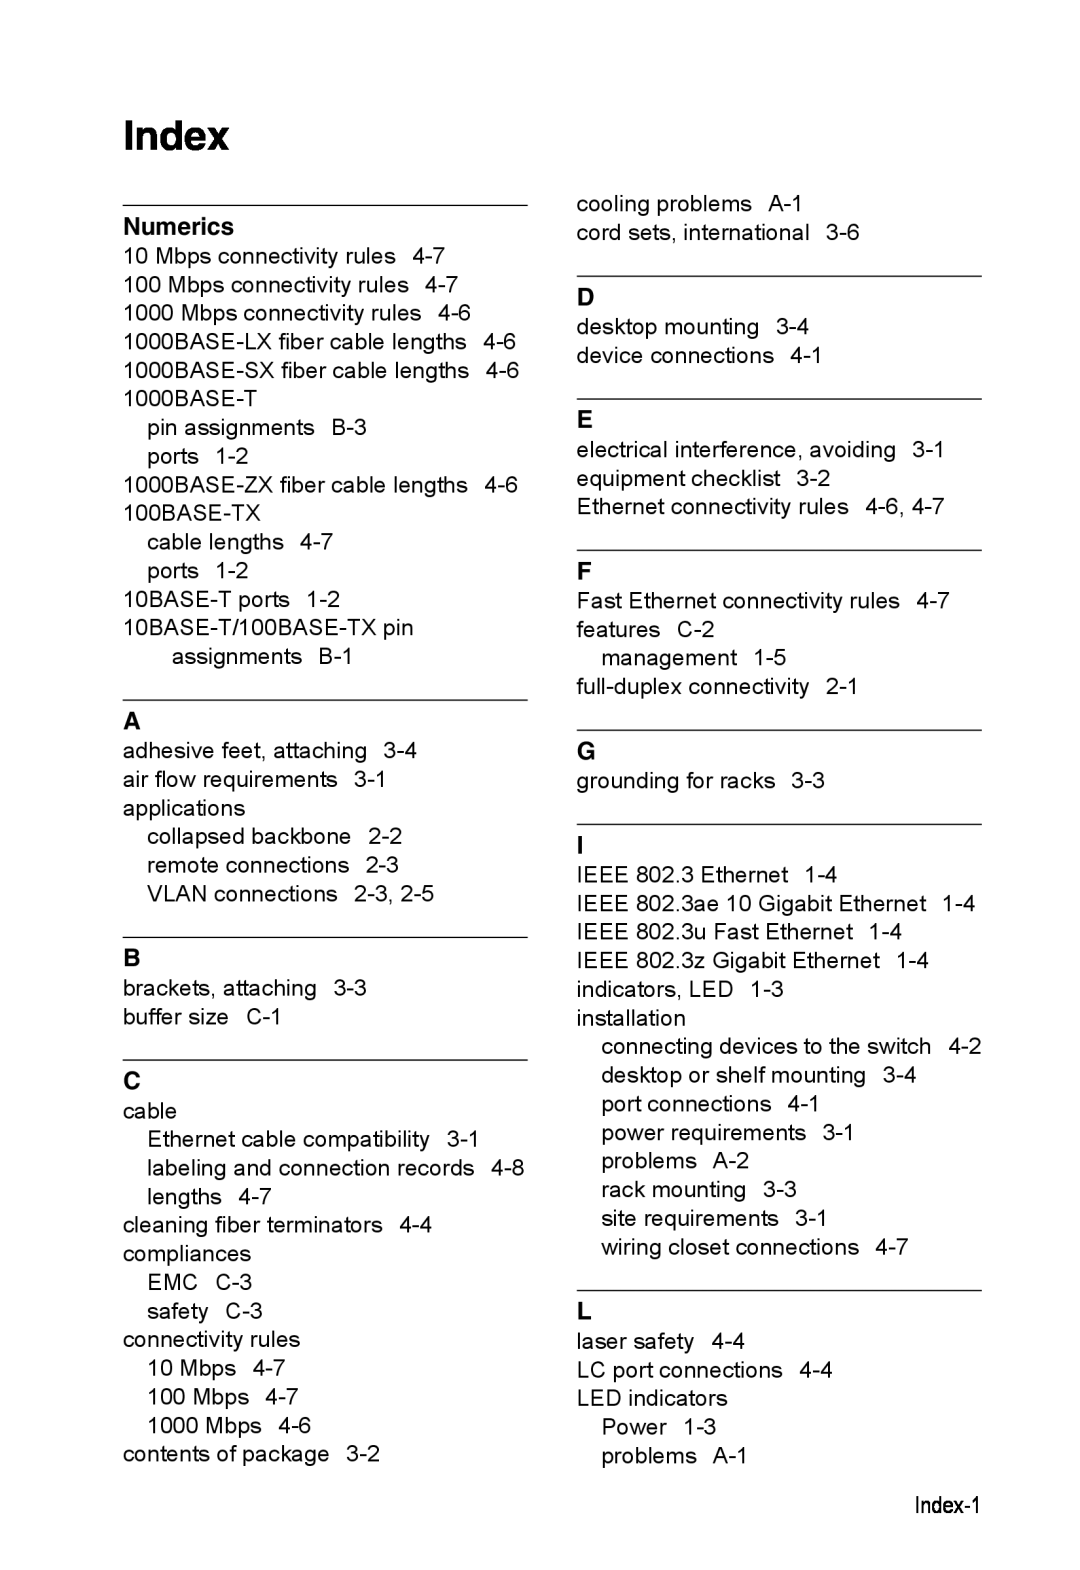 Accton Technology ES4324 manual Index, Numerics 